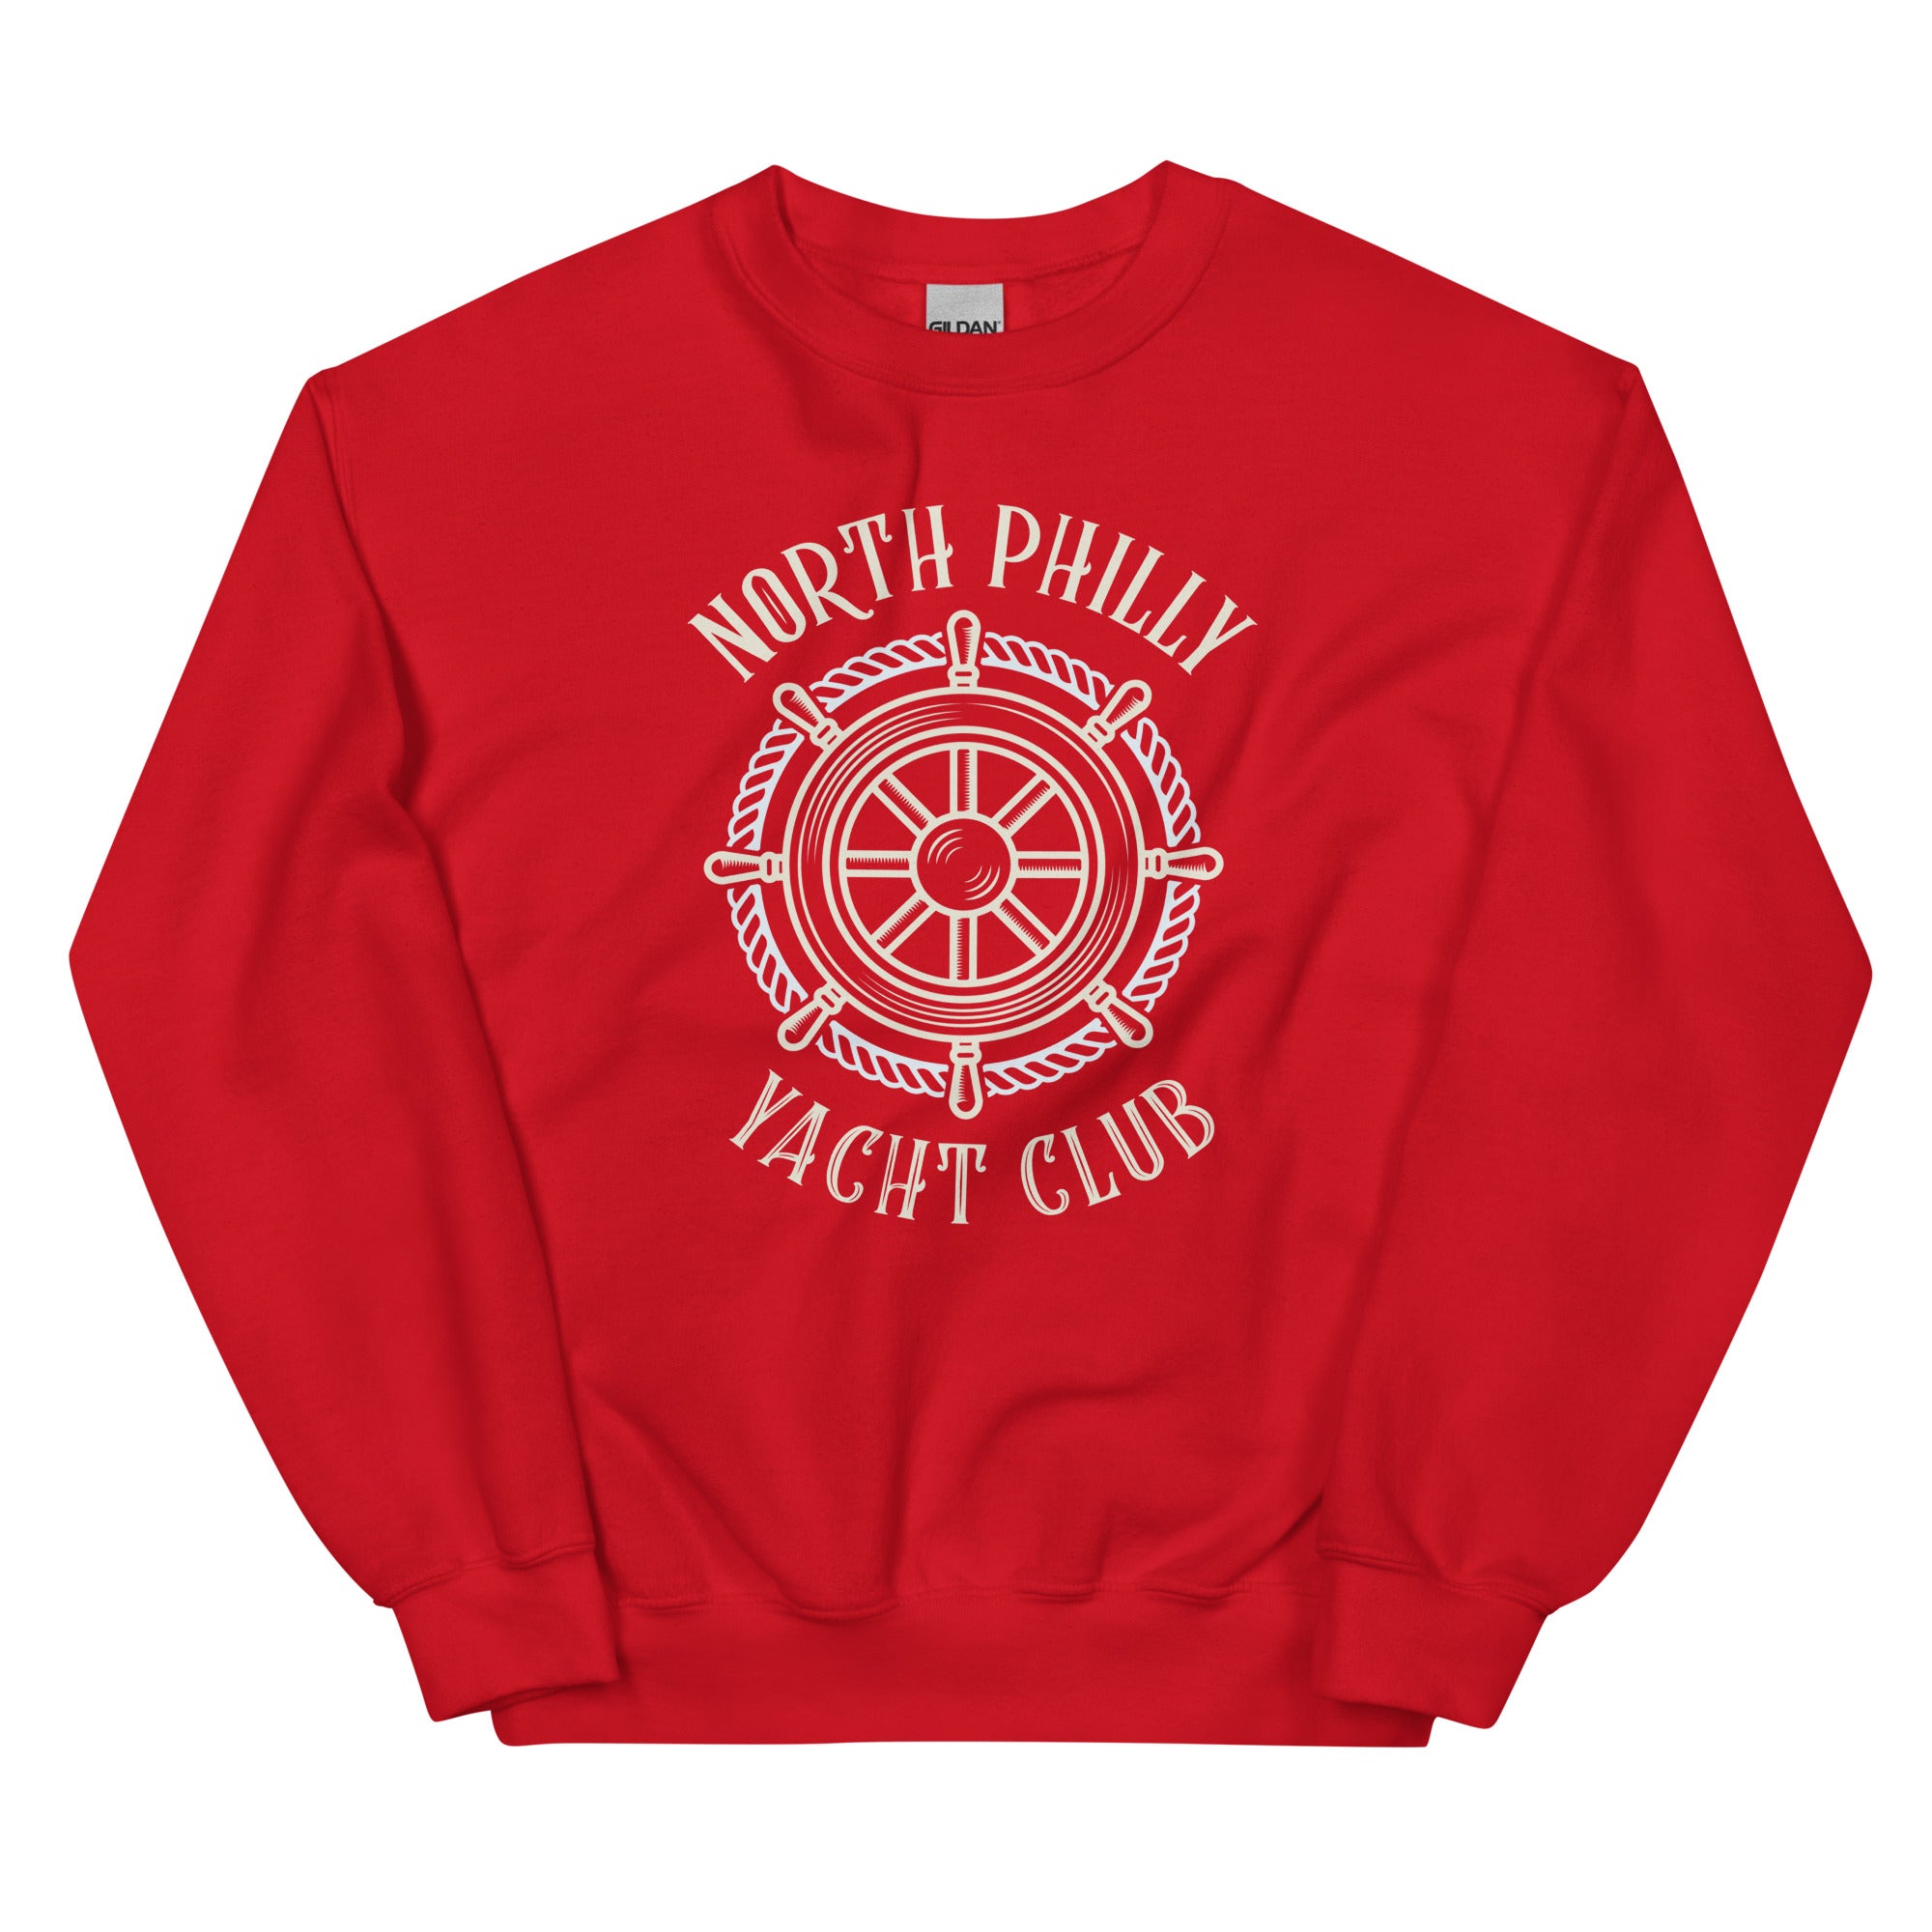 North Philly Philadelphia yacht club red sweatshirt Phillygoat